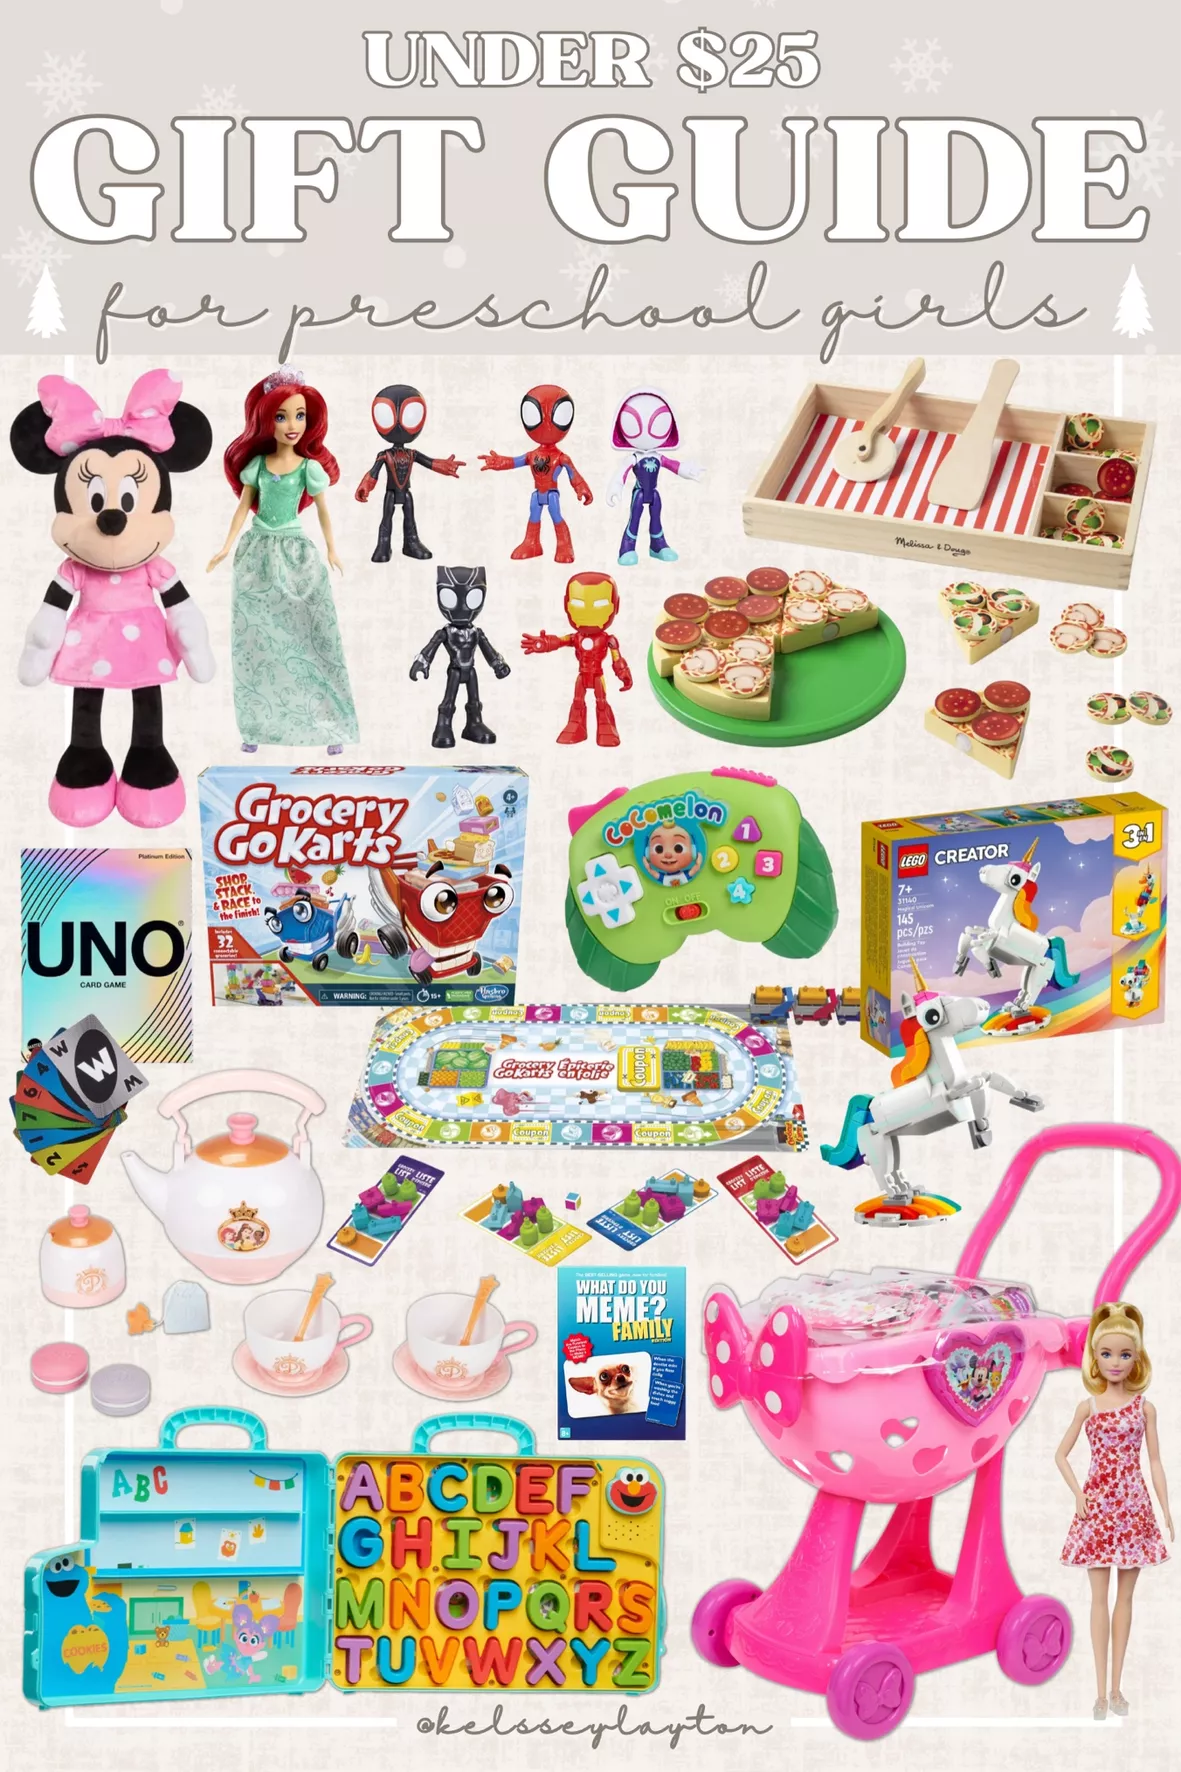 Zak Designs Disney Princess Kelso … curated on LTK